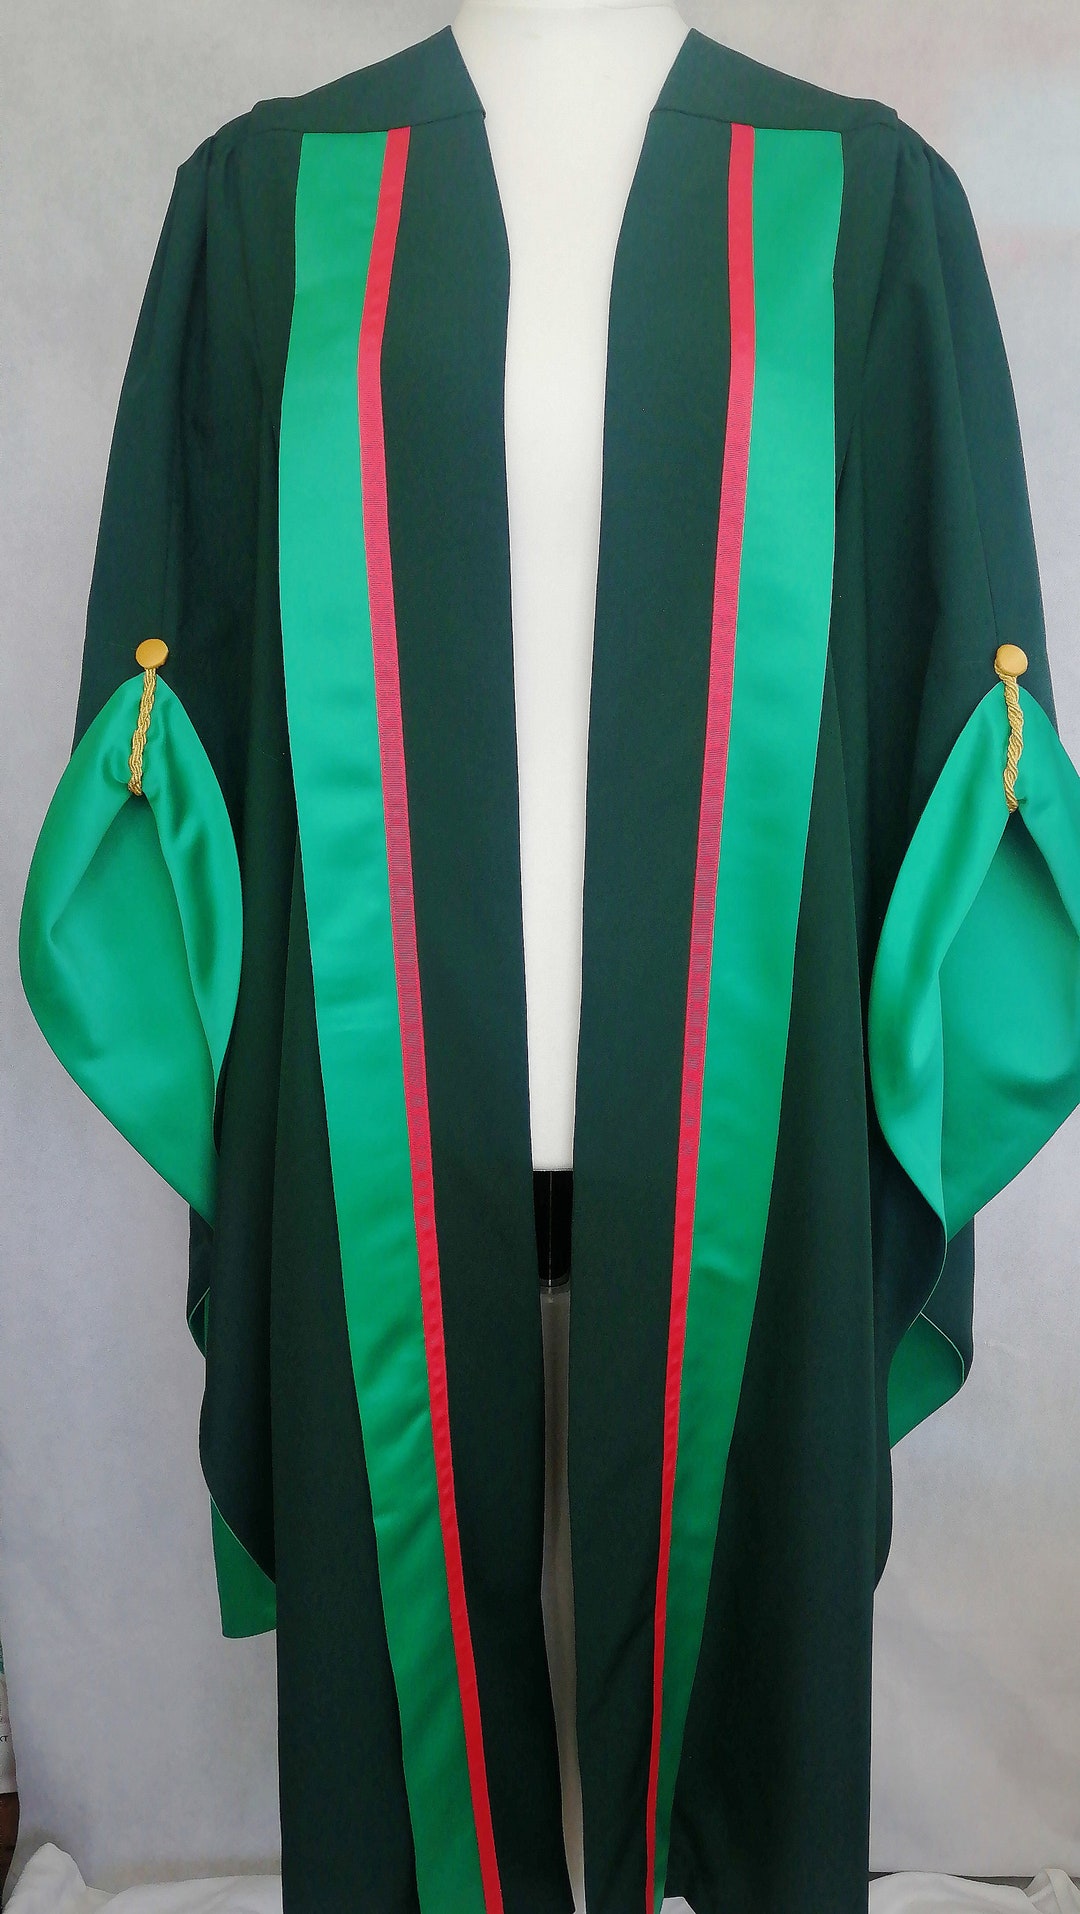 university of leeds phd graduation gown